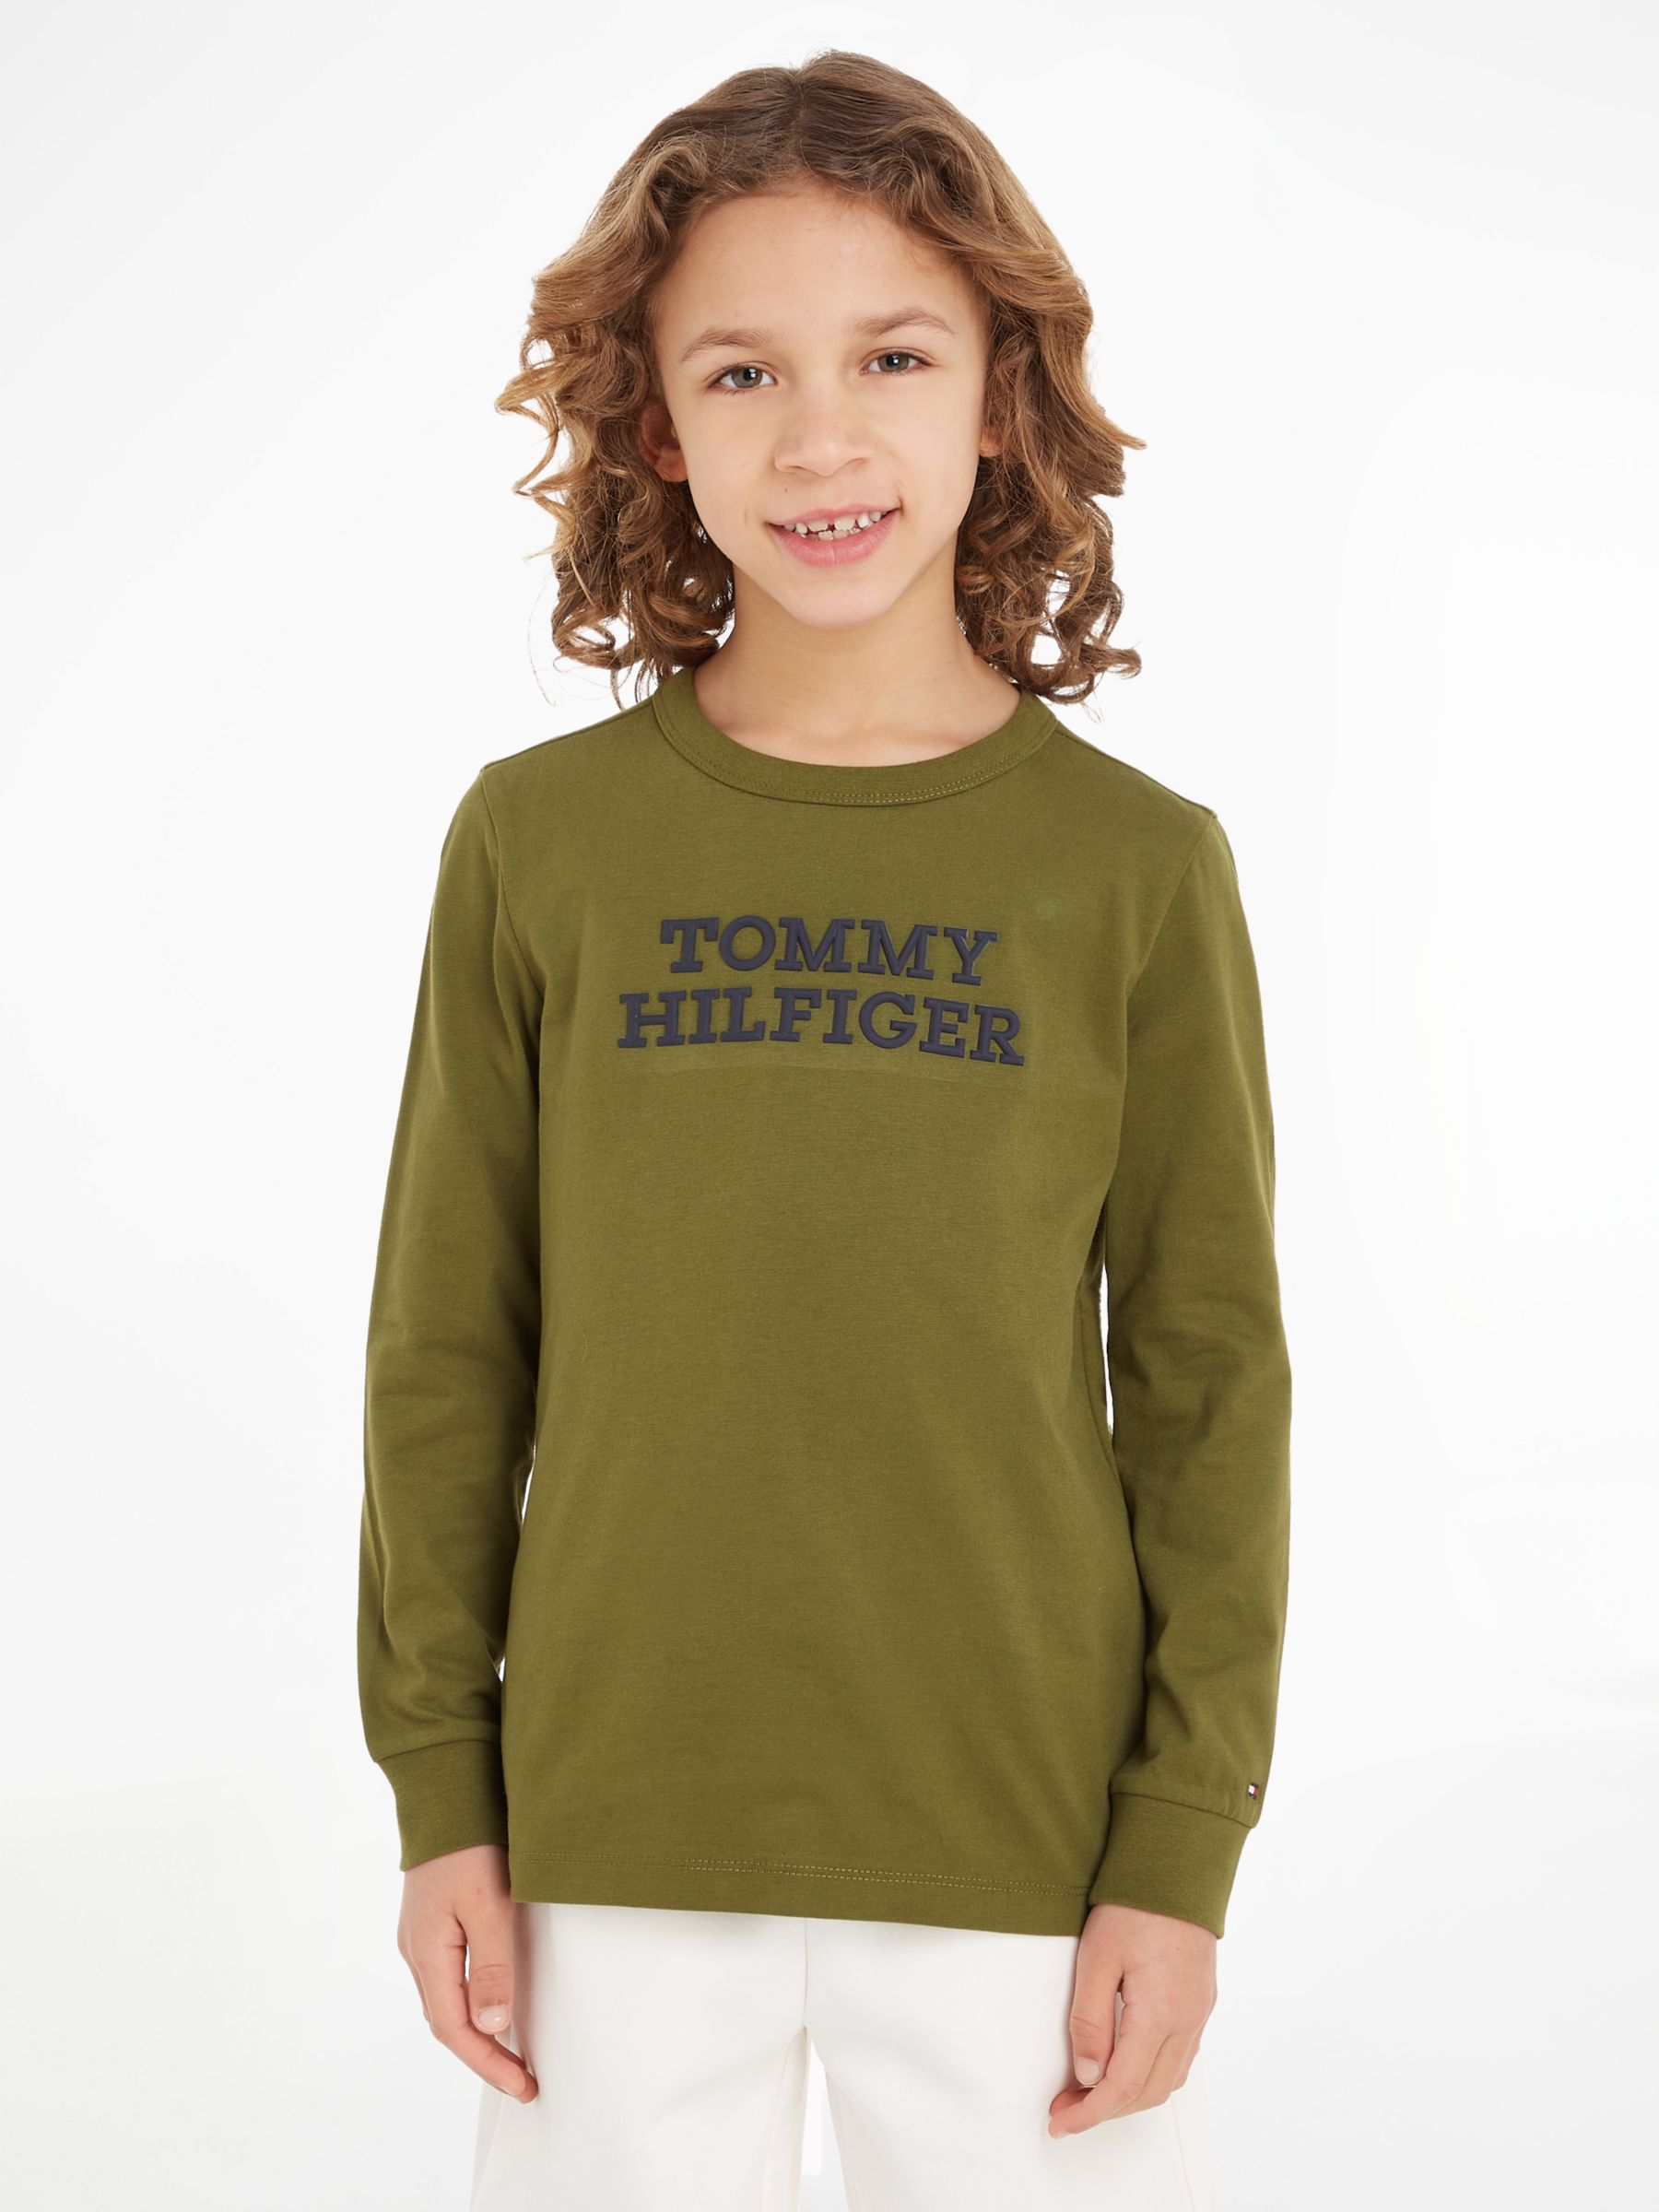 Raised 3 Tommy T-Shirt, Kids\' Putting Green, Long Hilfiger Sleeve Logo years